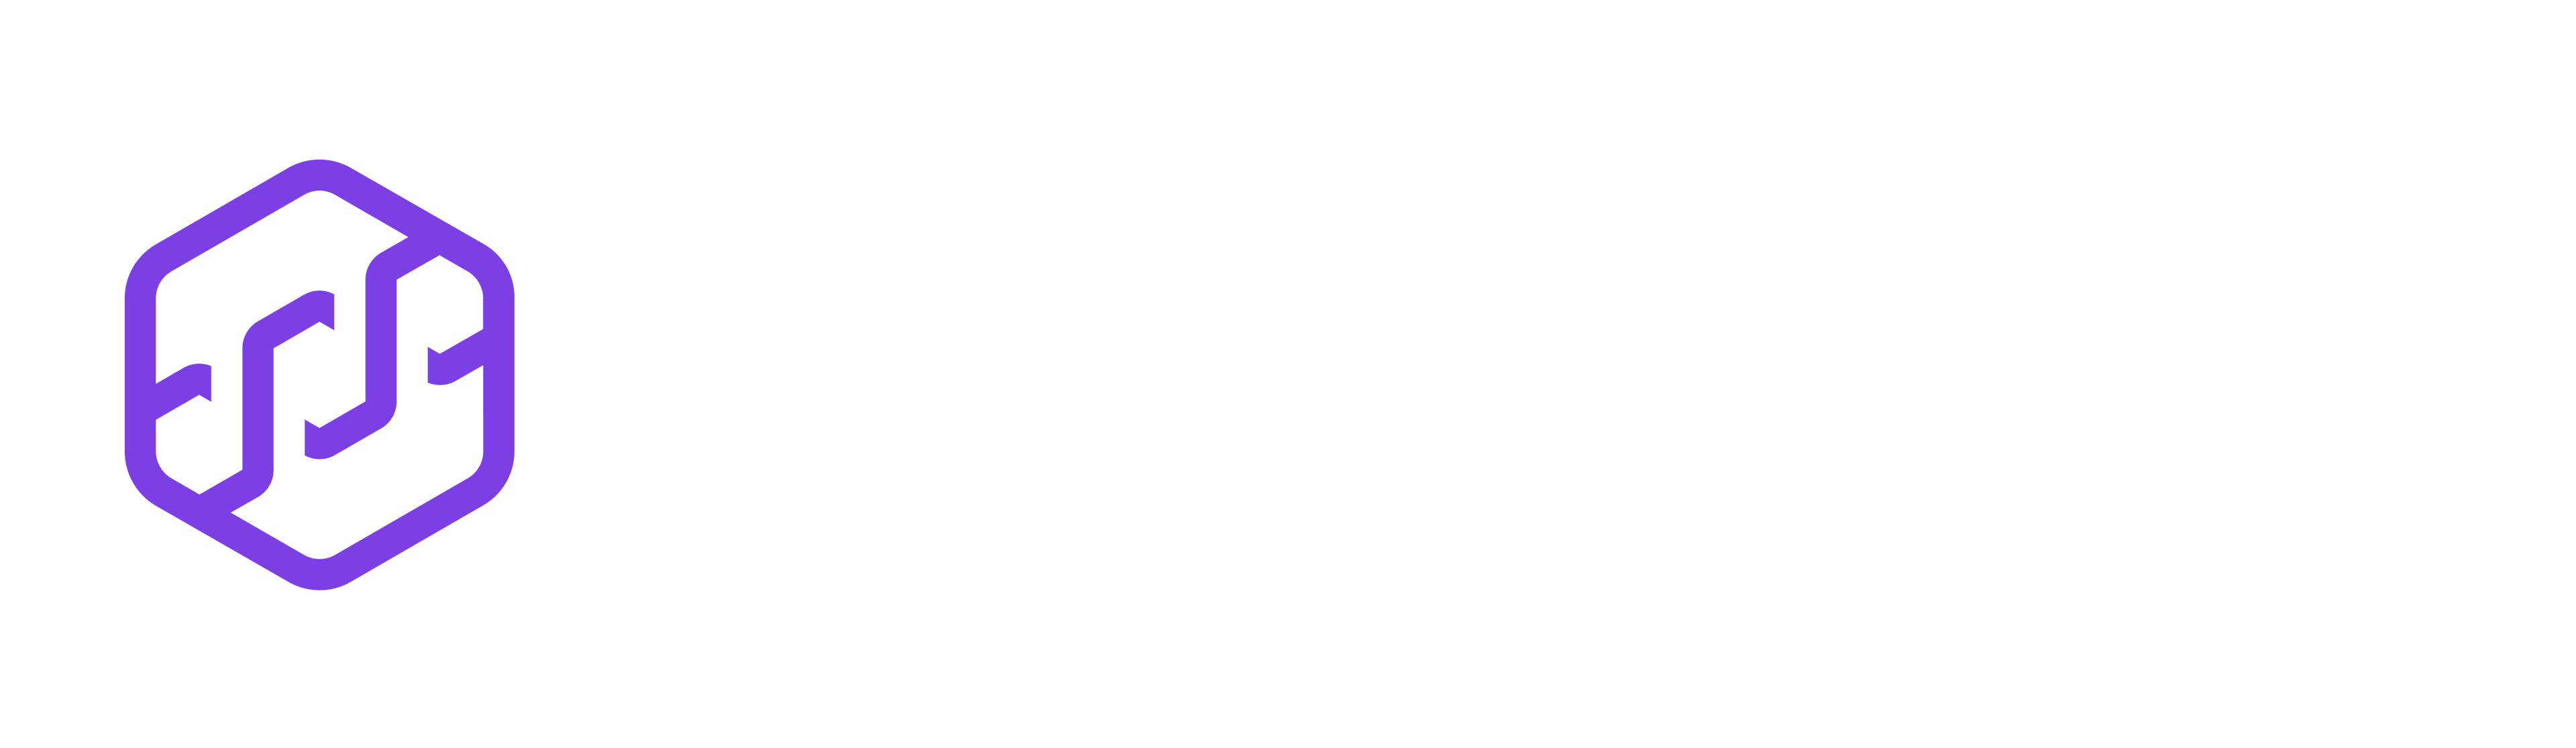 Polygon Avail